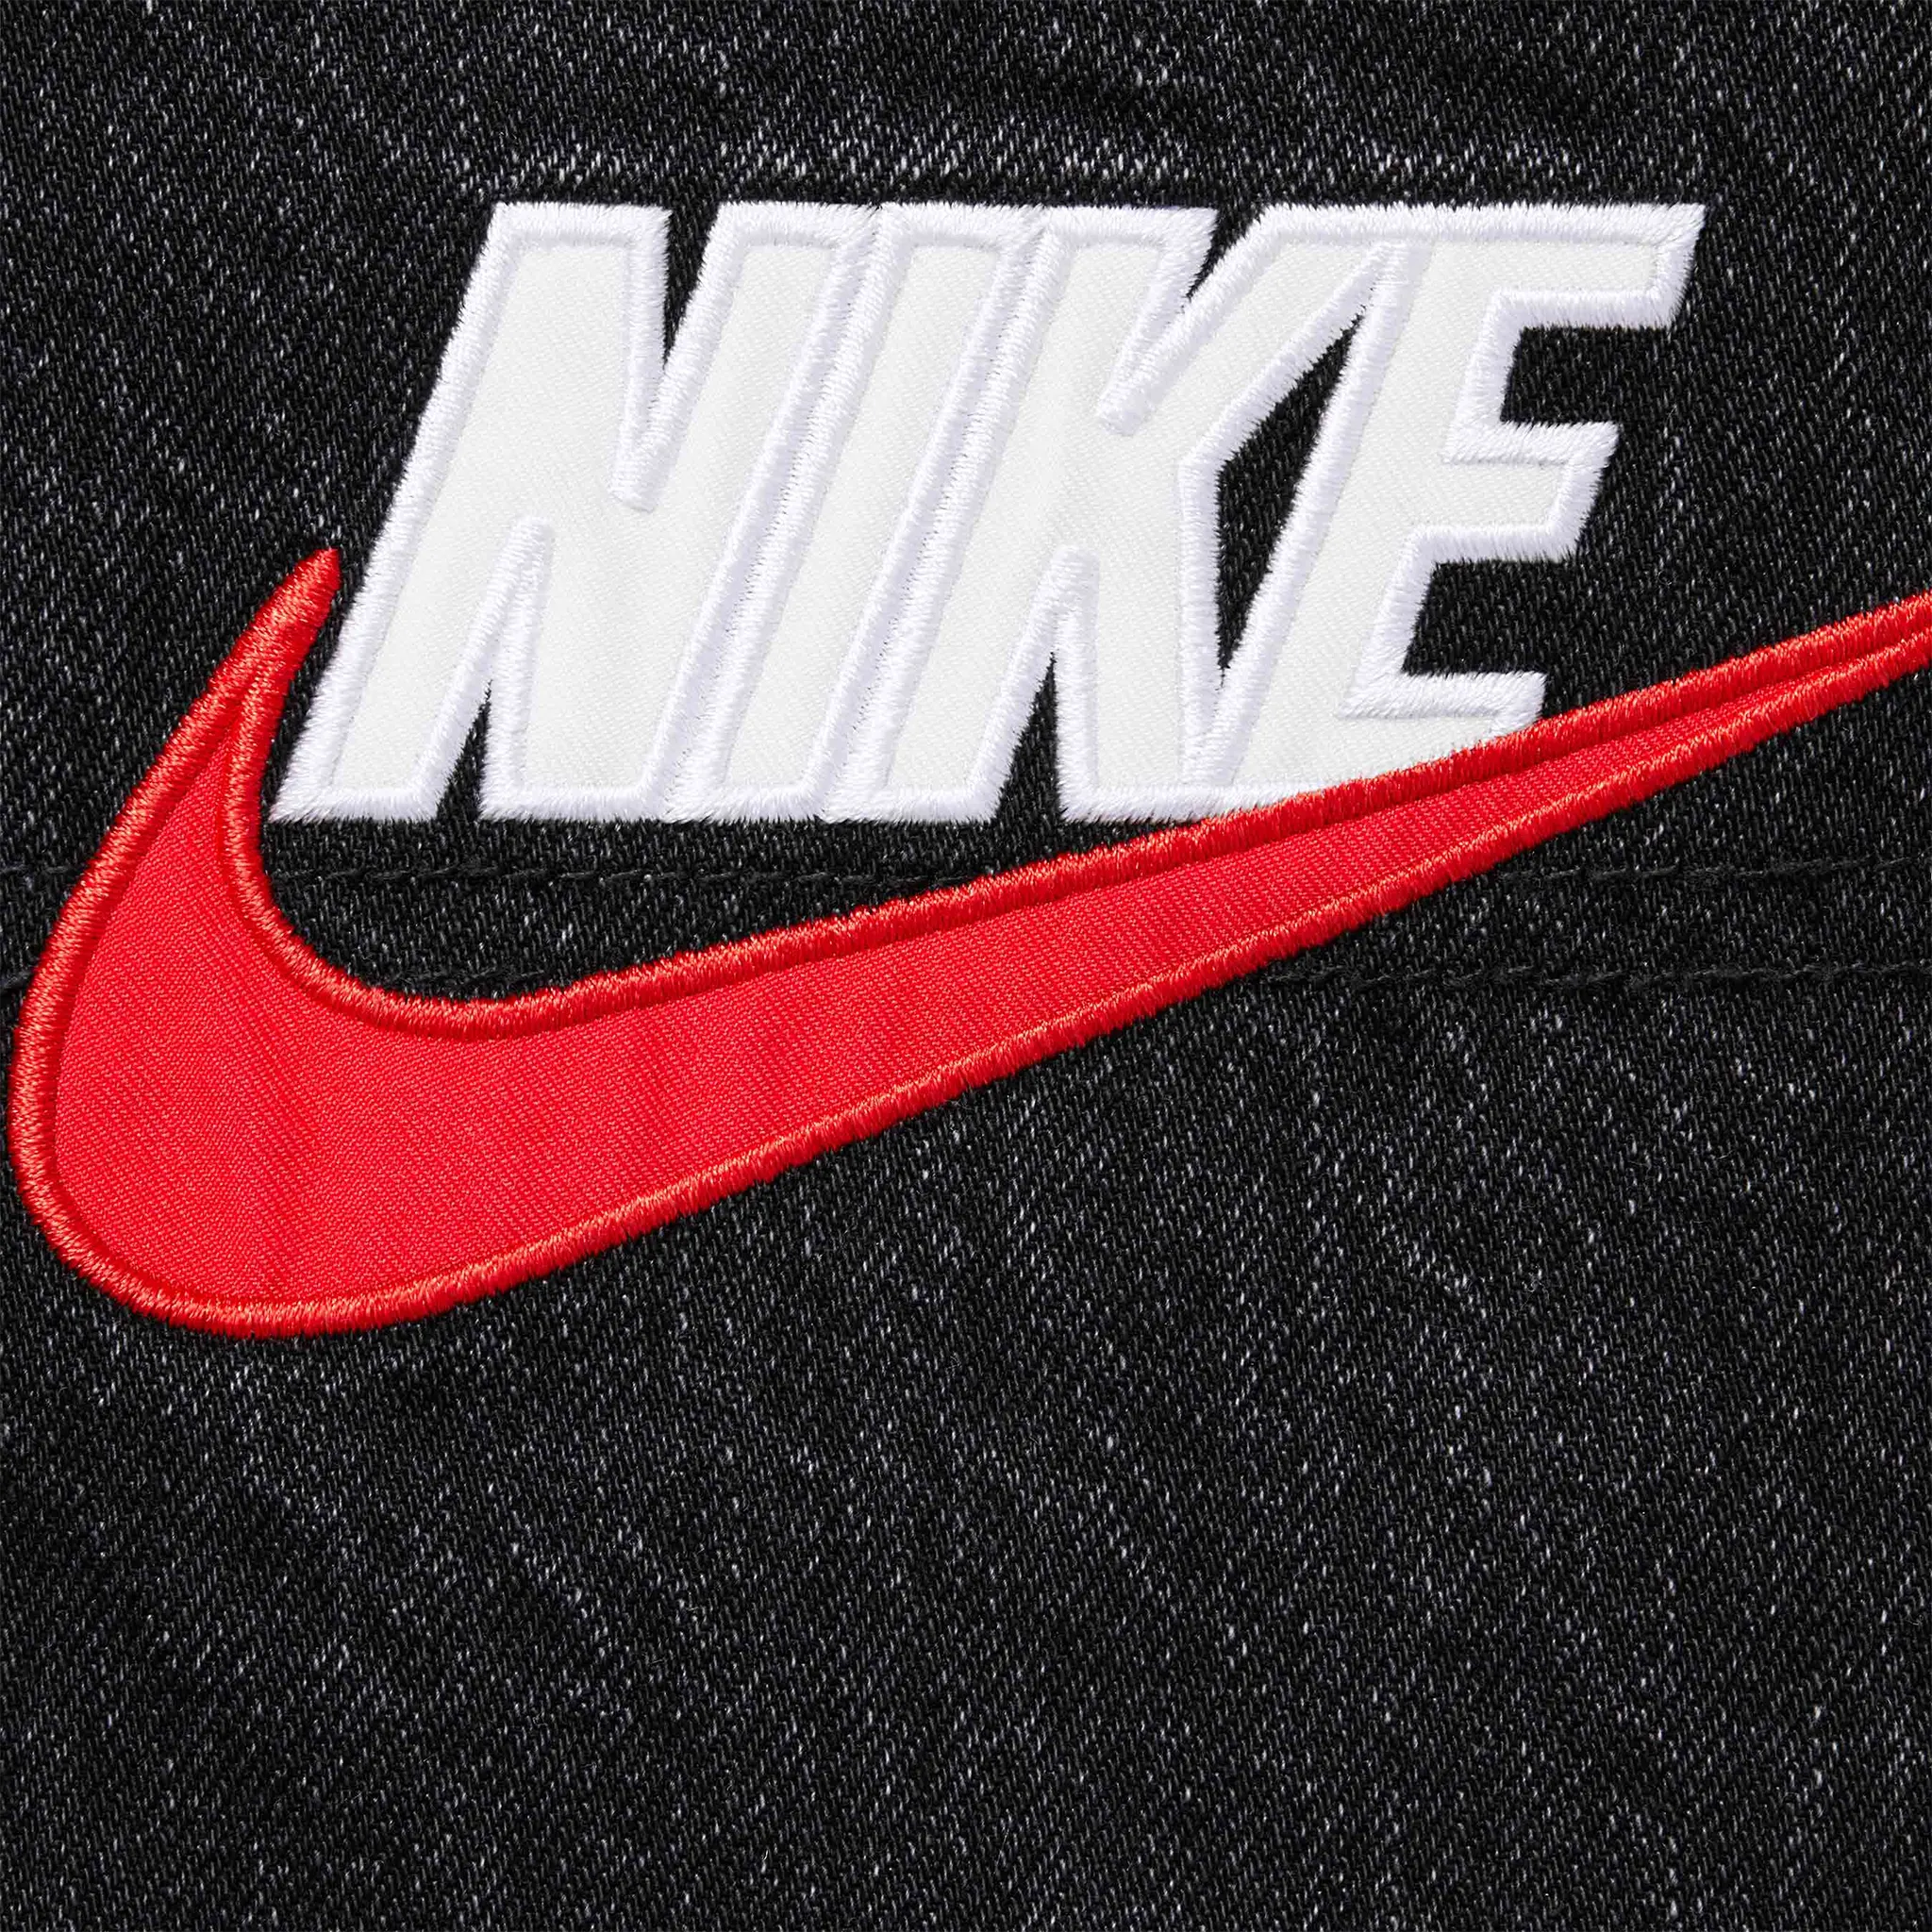 Detail view of Nike Supreme Denim Black Shorts